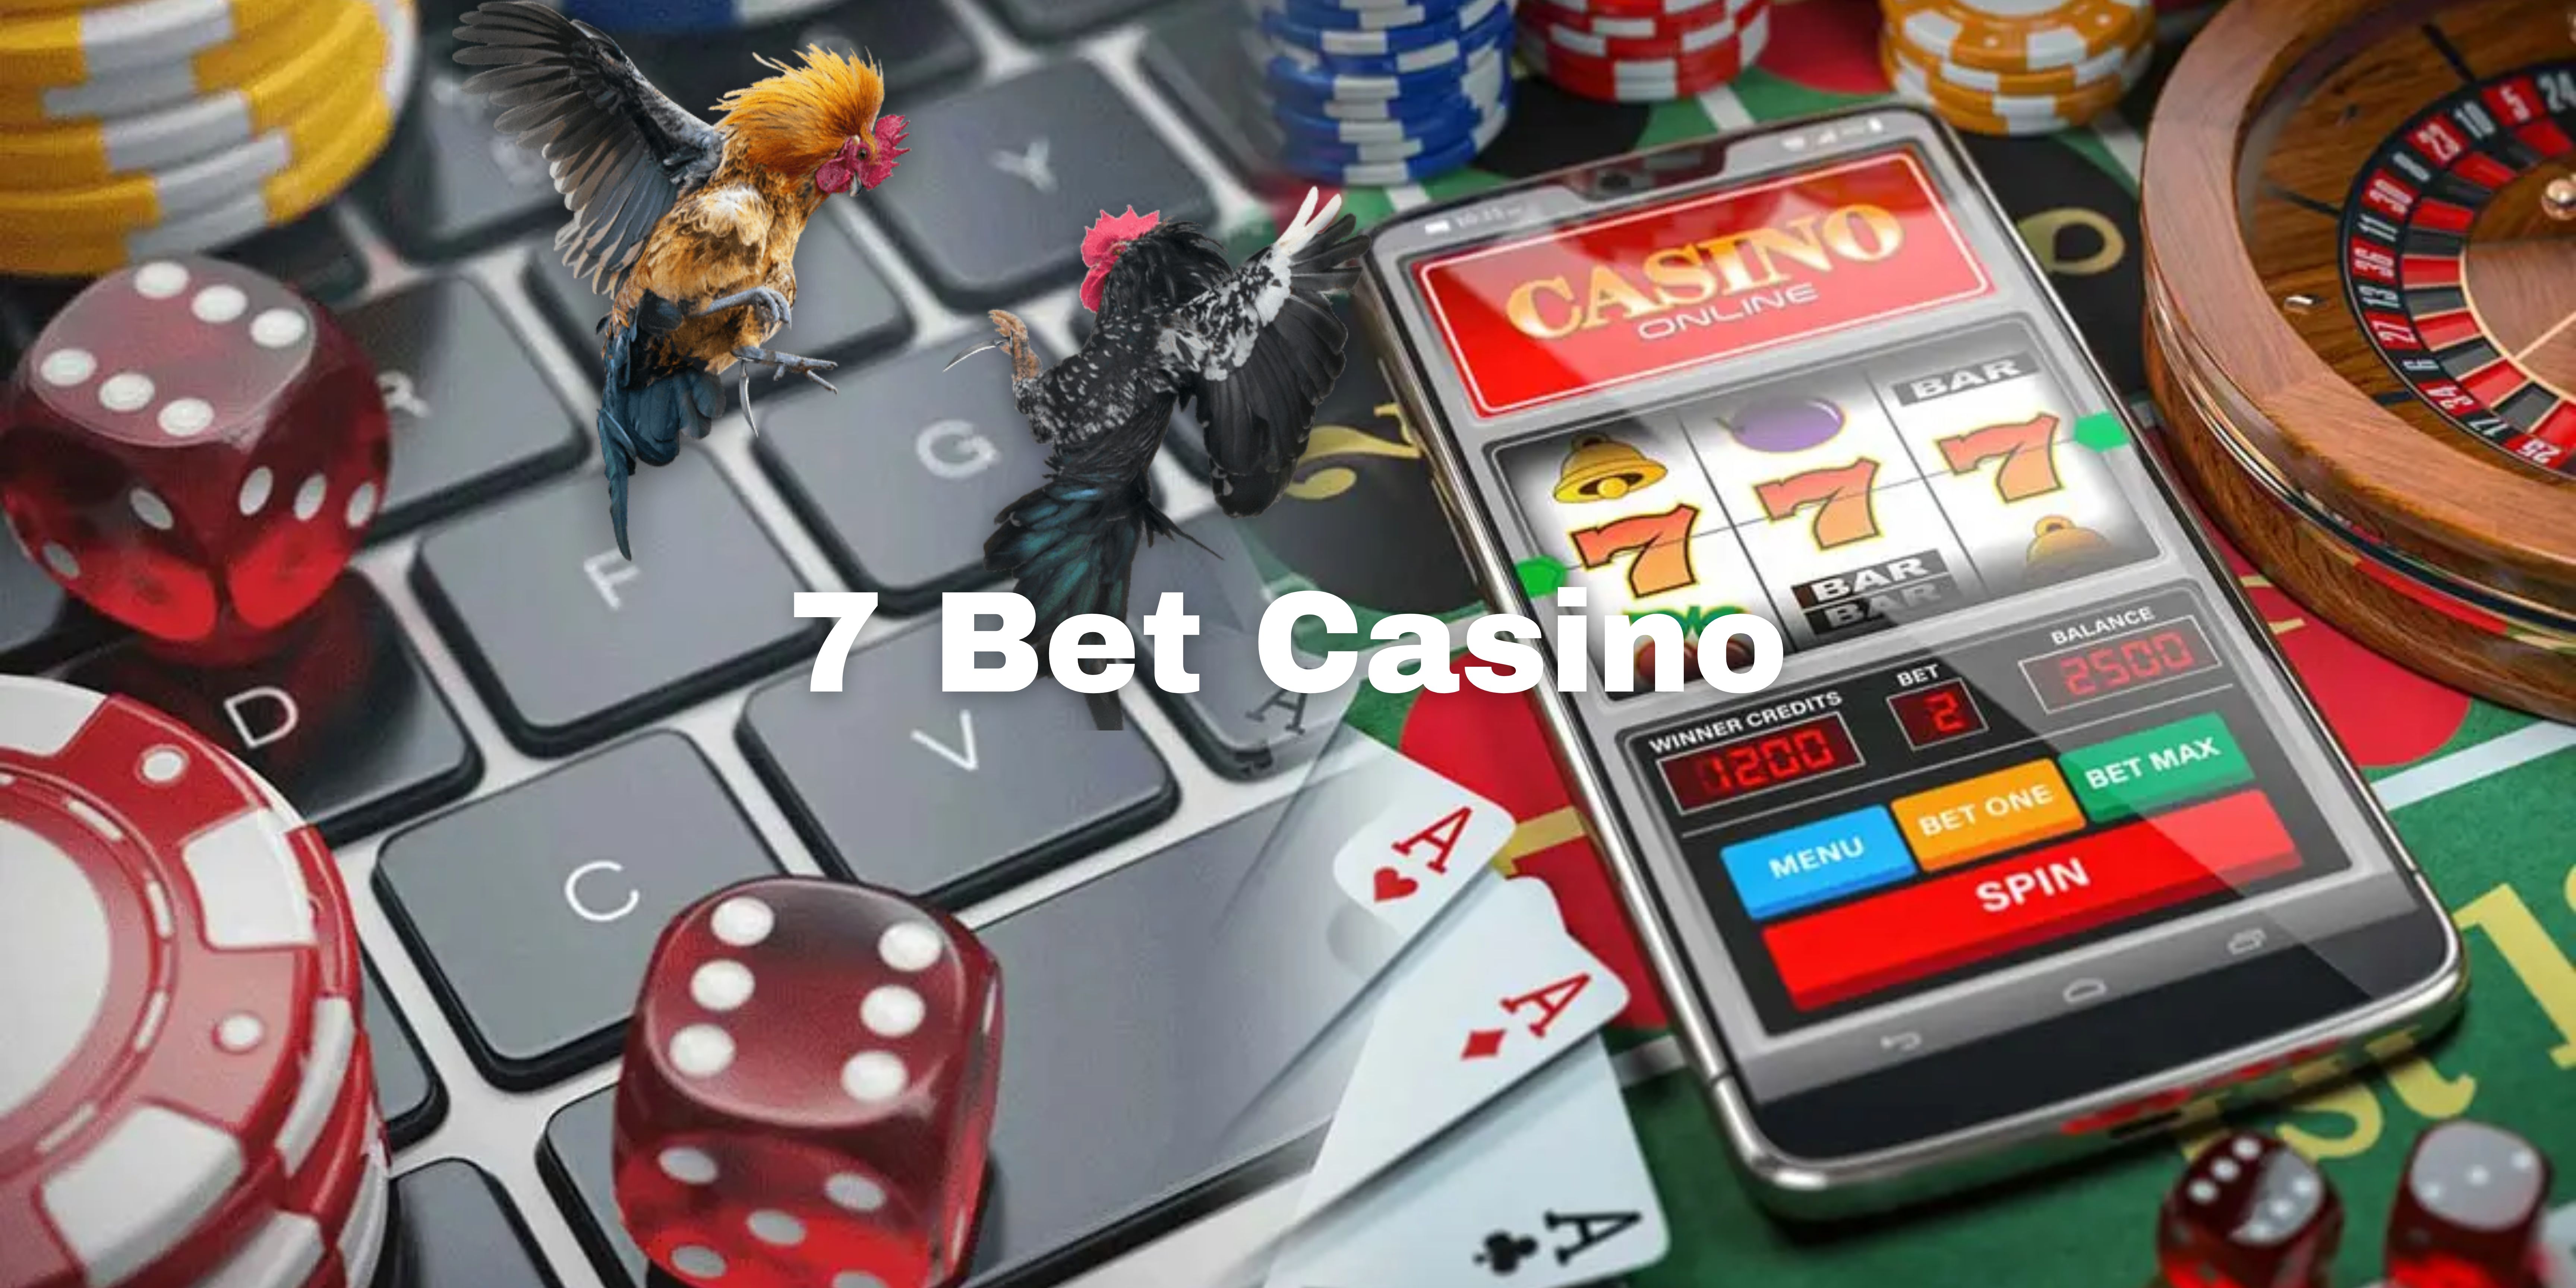 7 Bet Casino